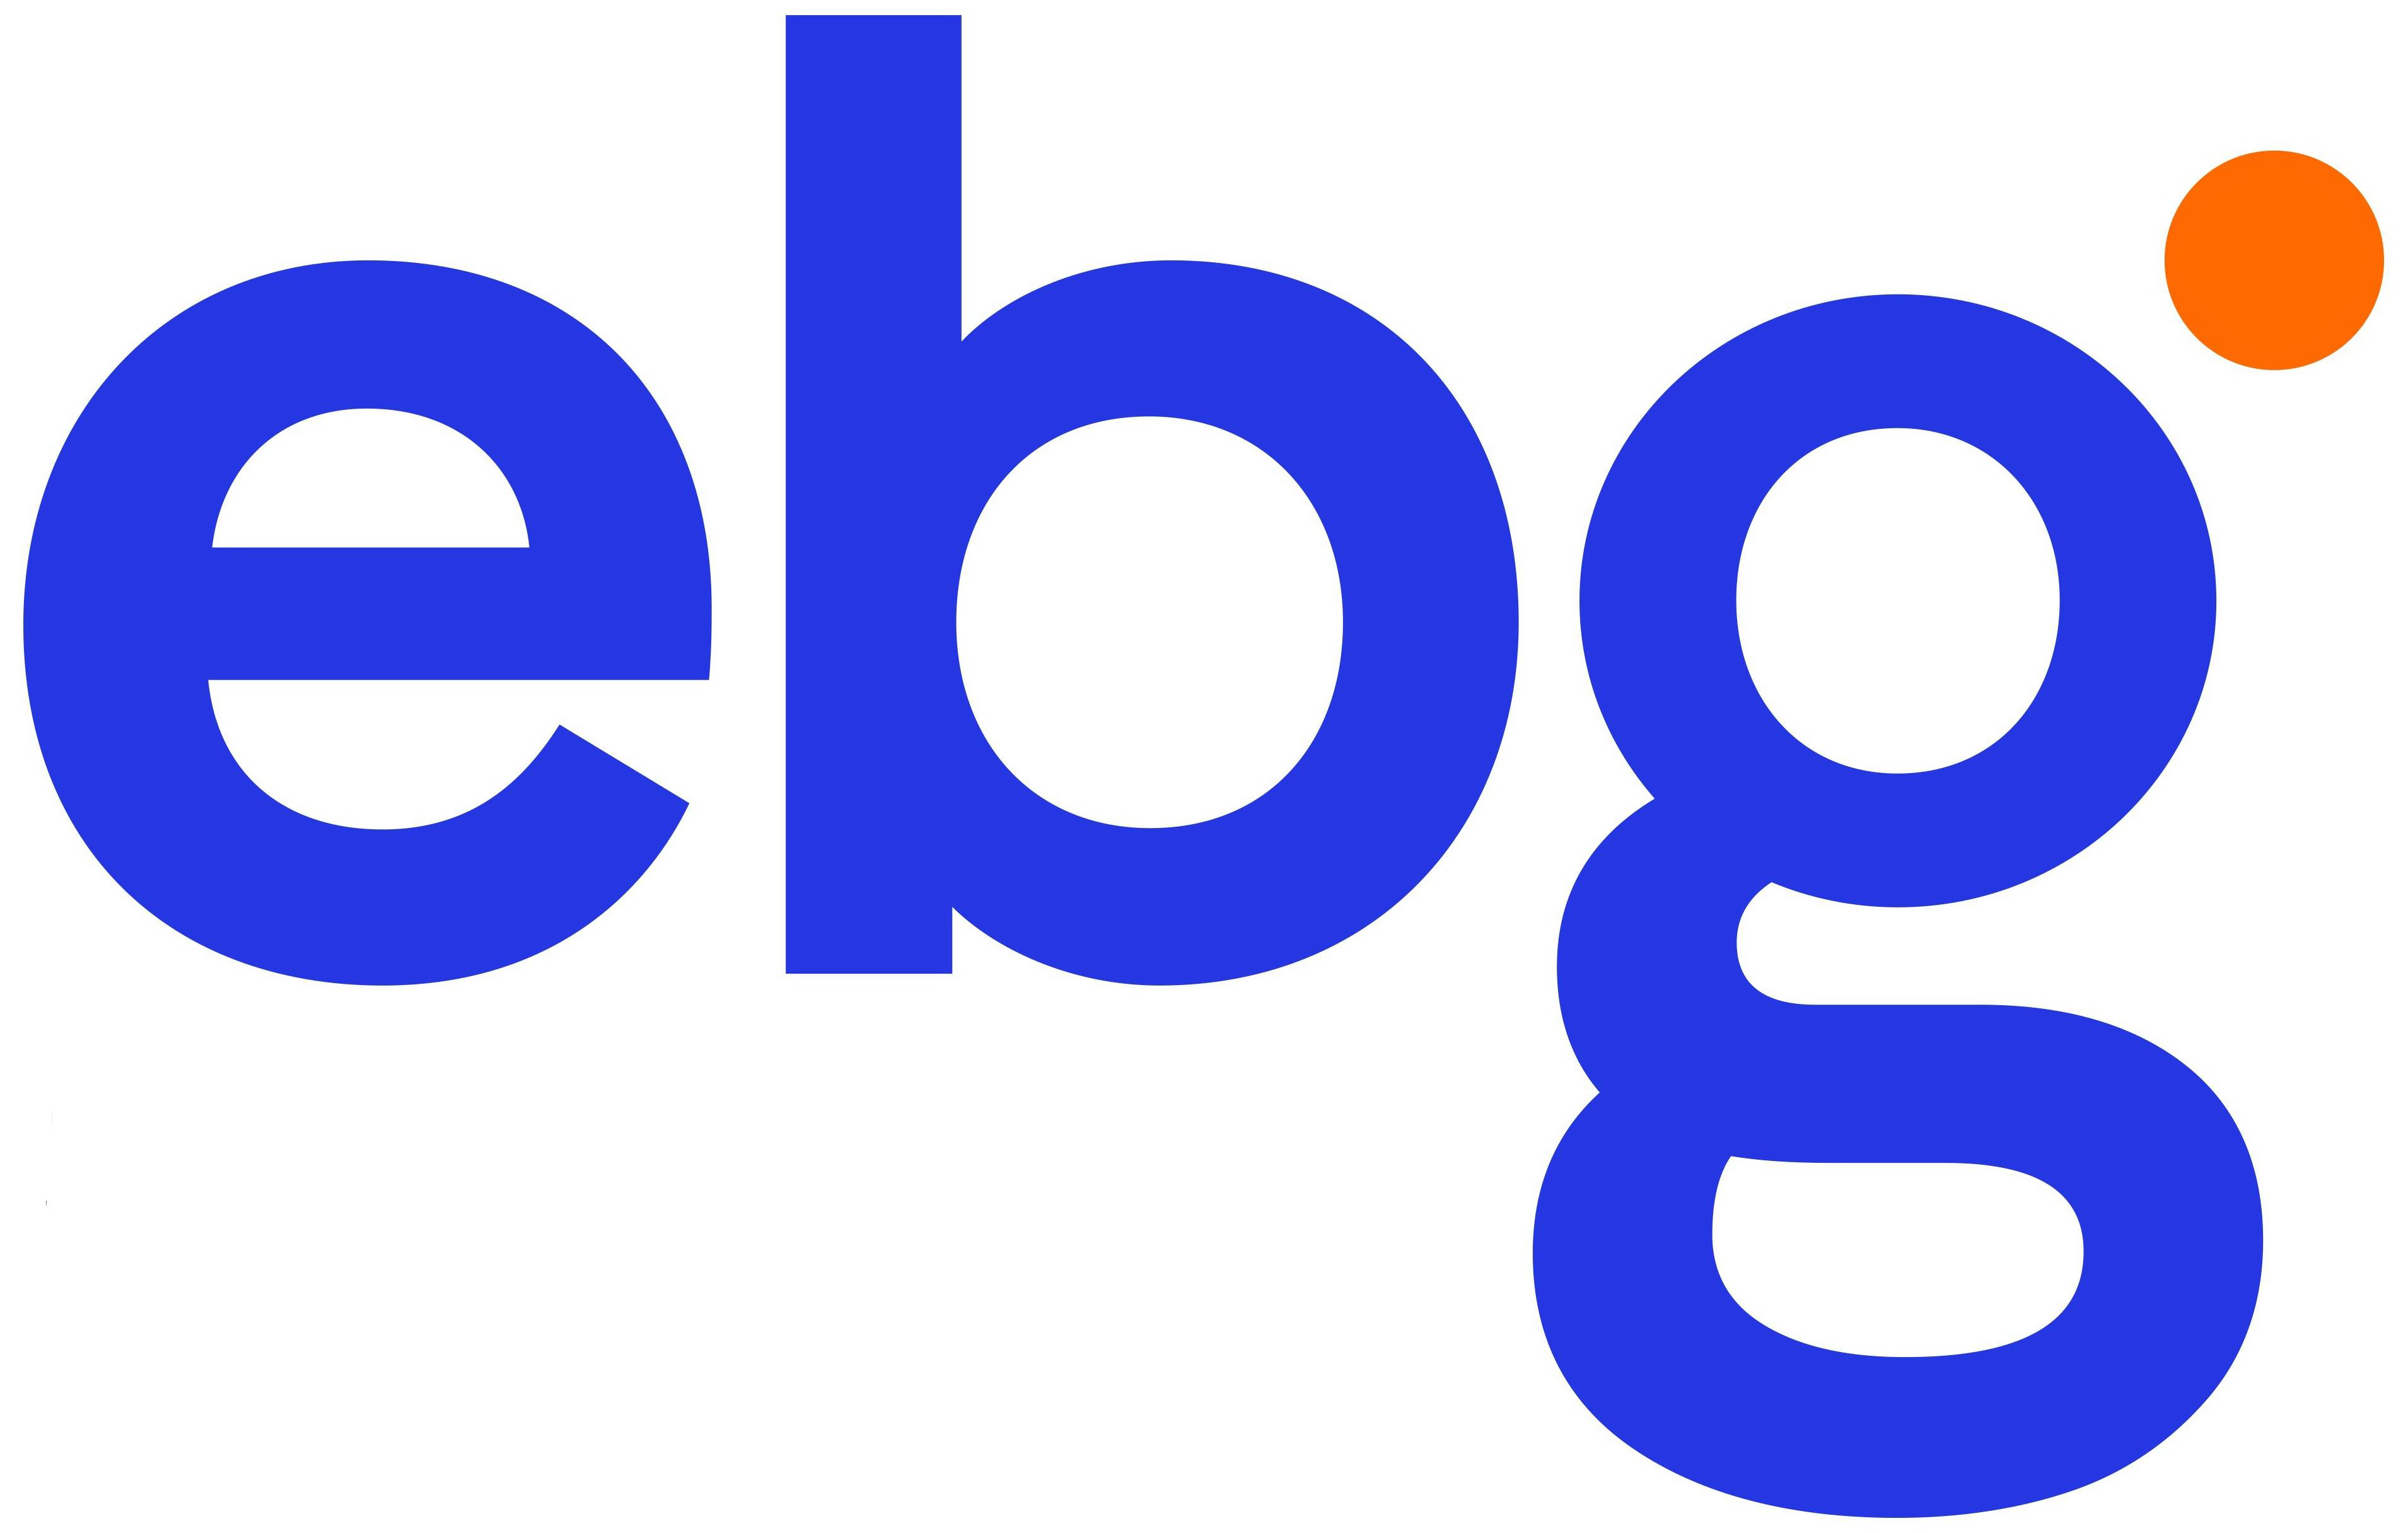 Trademark Logo EBG